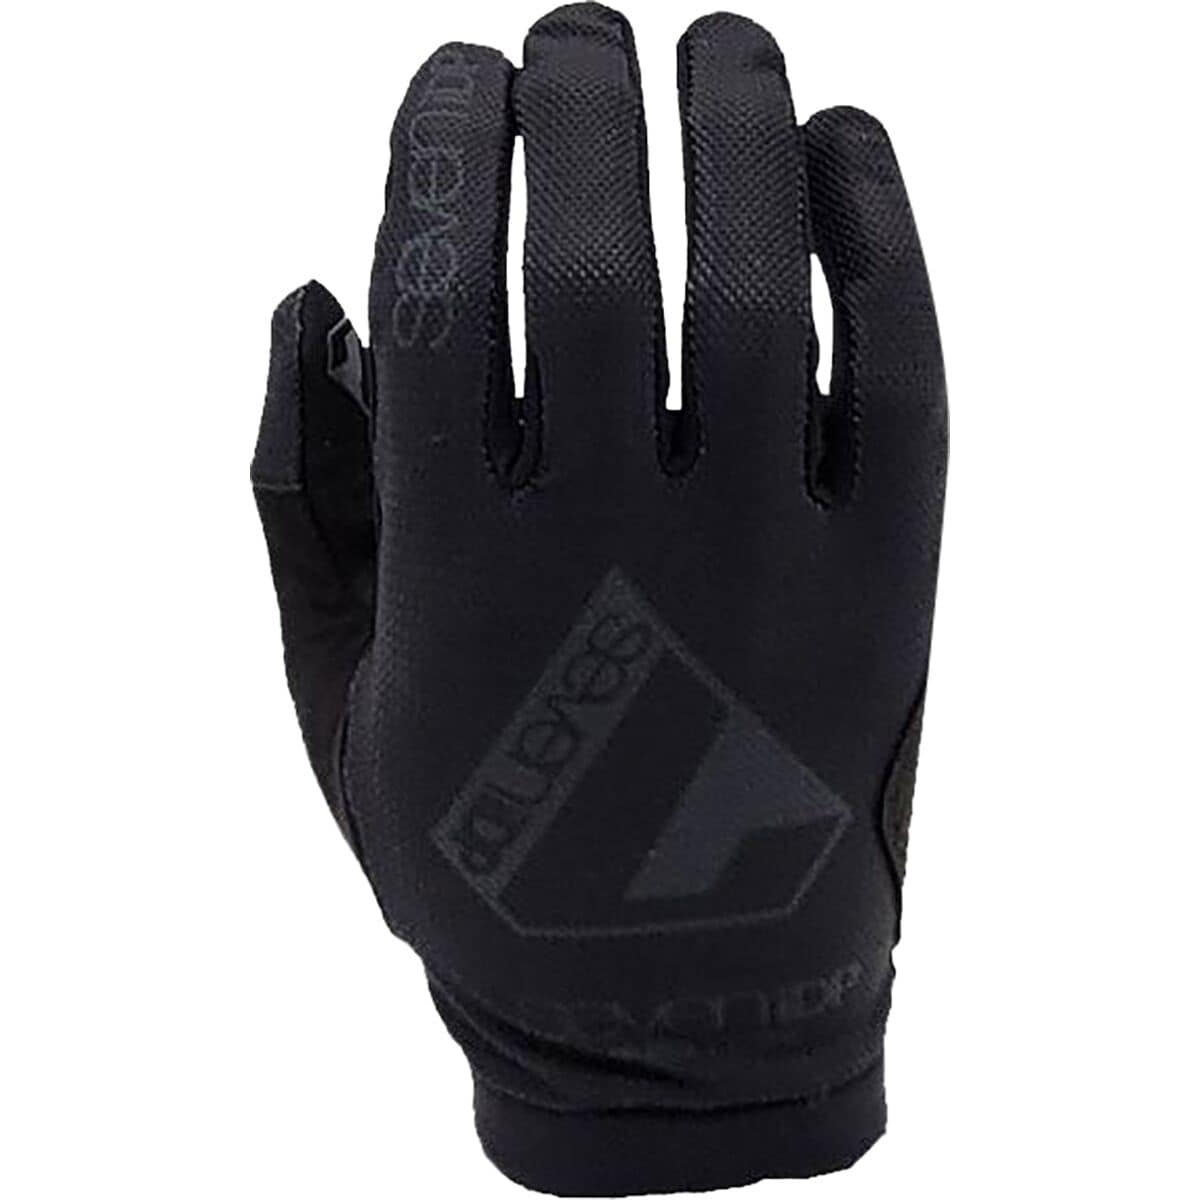 7 Protection Transition Glove - Men's Black, L